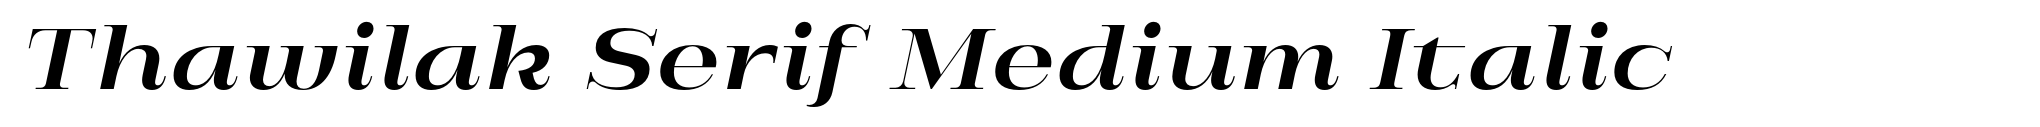 Thawilak Serif Medium Italic image